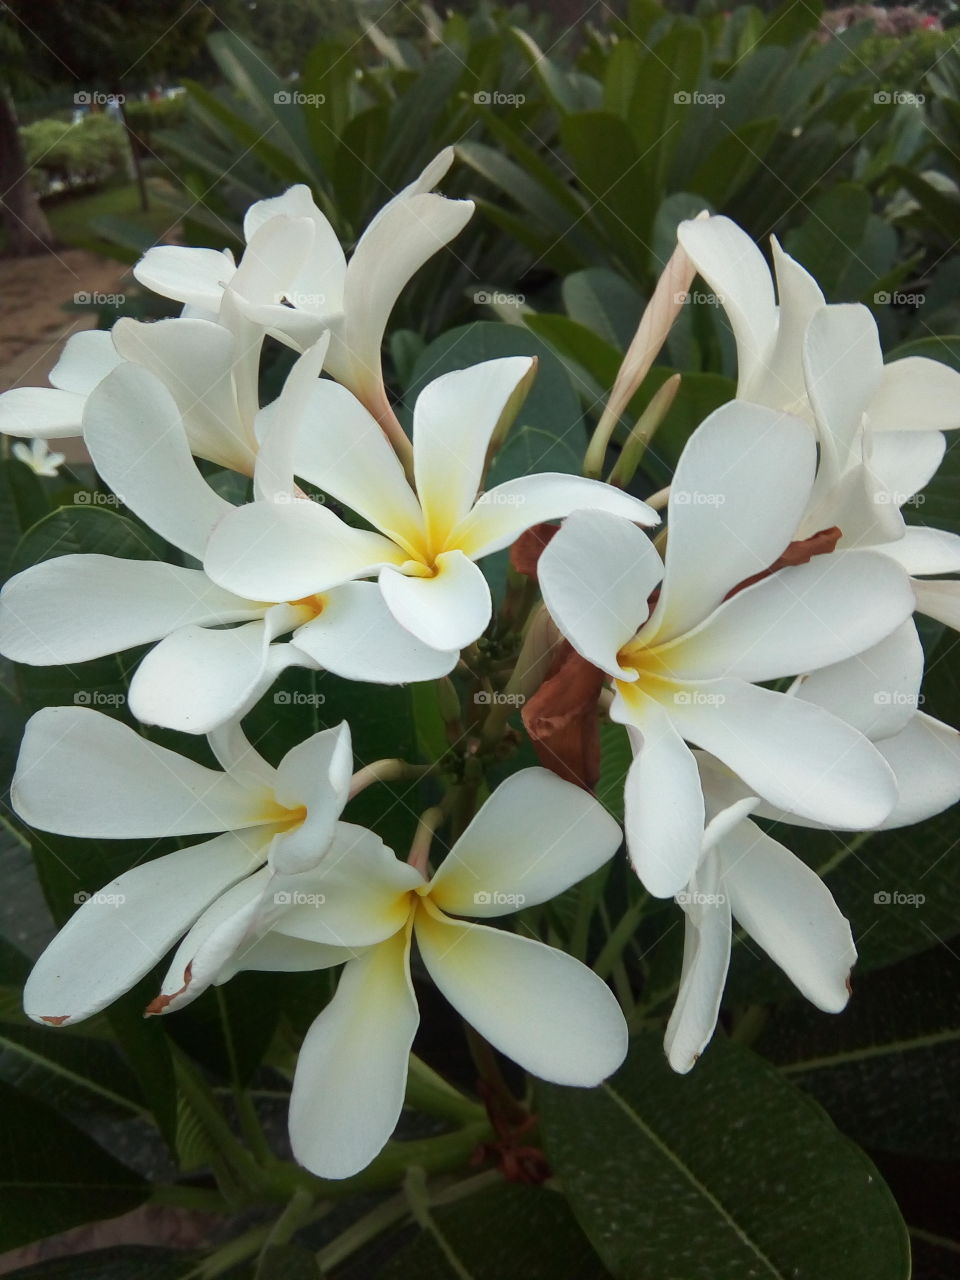 A picture of Beautiful flowers taken by JOSHI123 at PUNJABI UNIVERSITY, PATIALA. INDIA